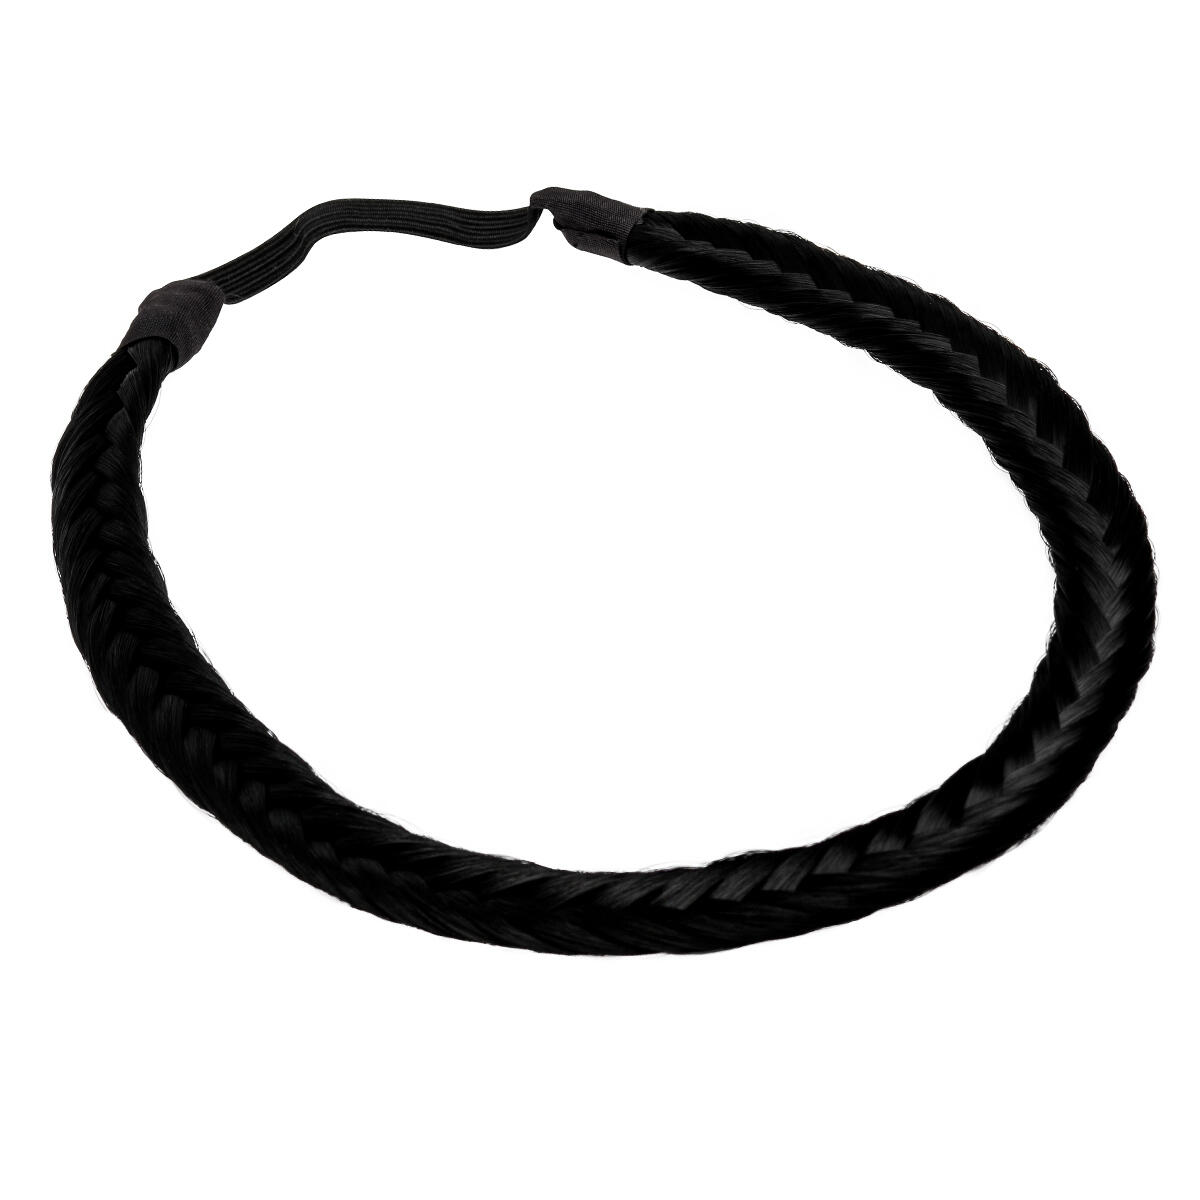 Synthetic Braided Headband 1.0 Black 0 cm